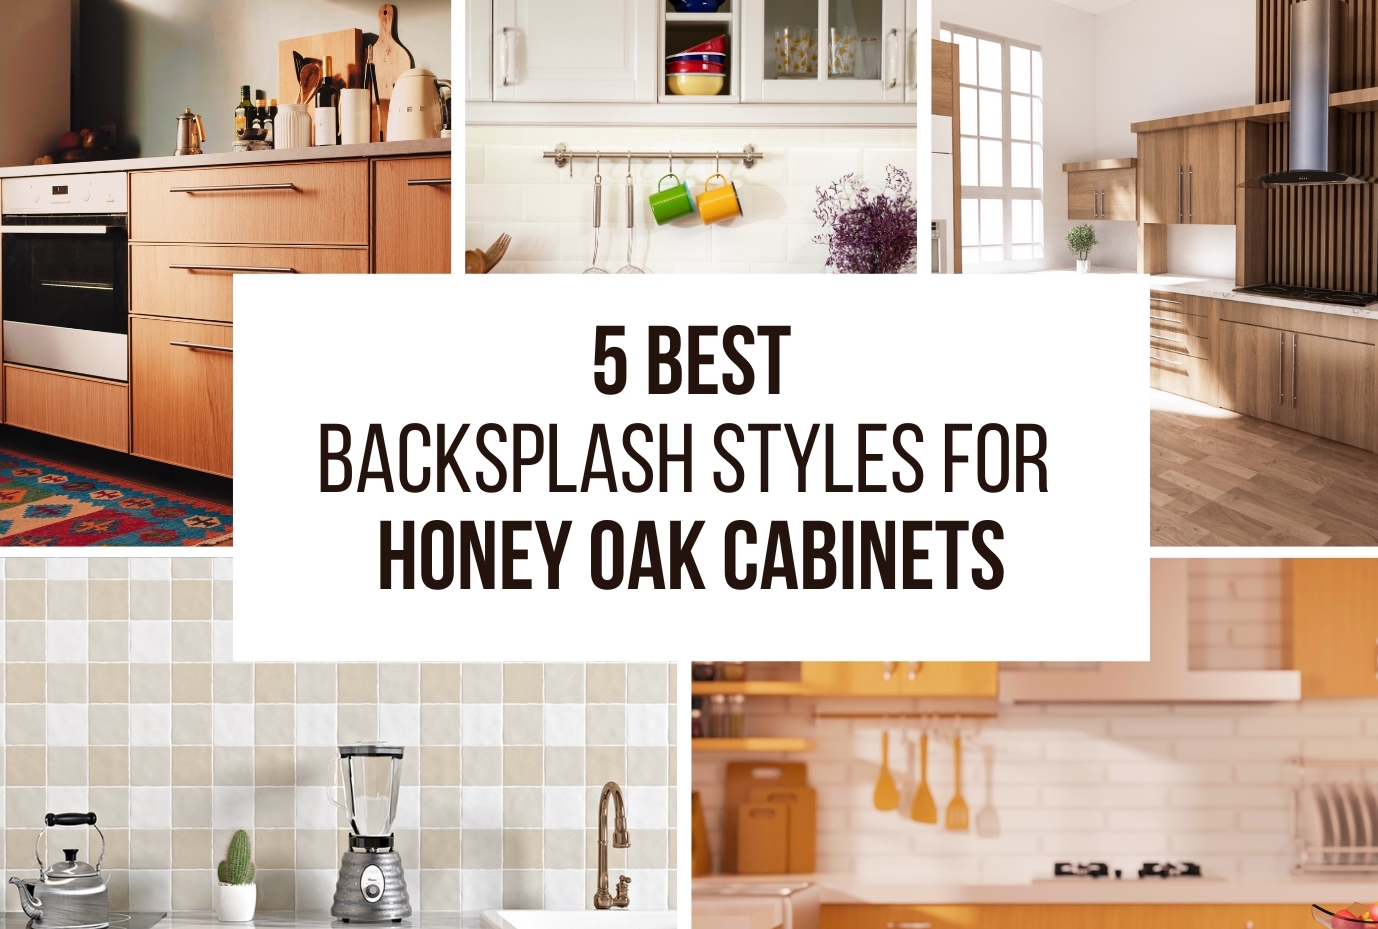 5 Best Backsplash Styles For Honey Oak Cabinets